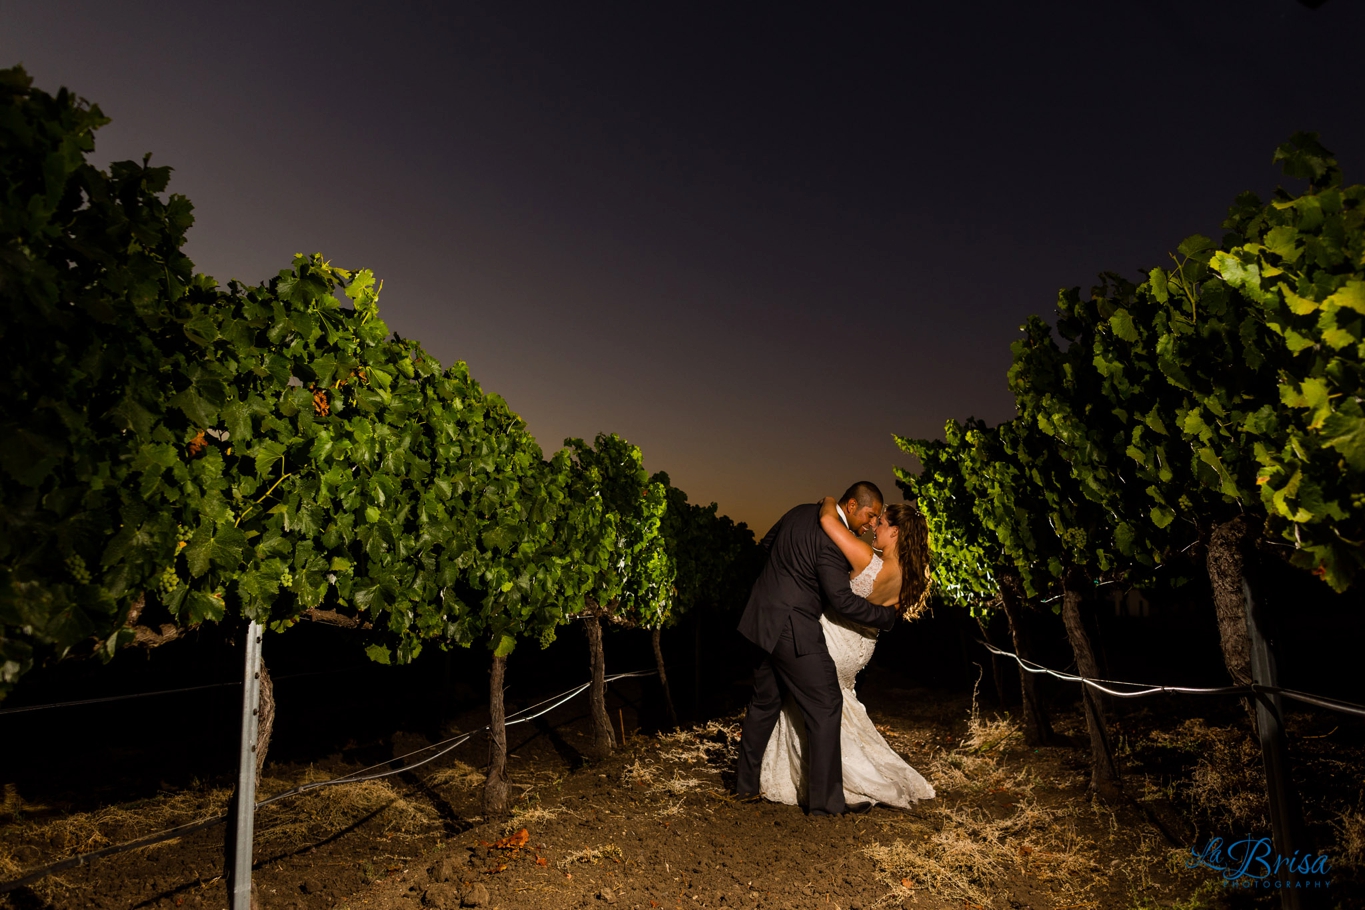 Jen & Brandon | Wedding Photography Preview | Hollister, CA | Chris Hsieh